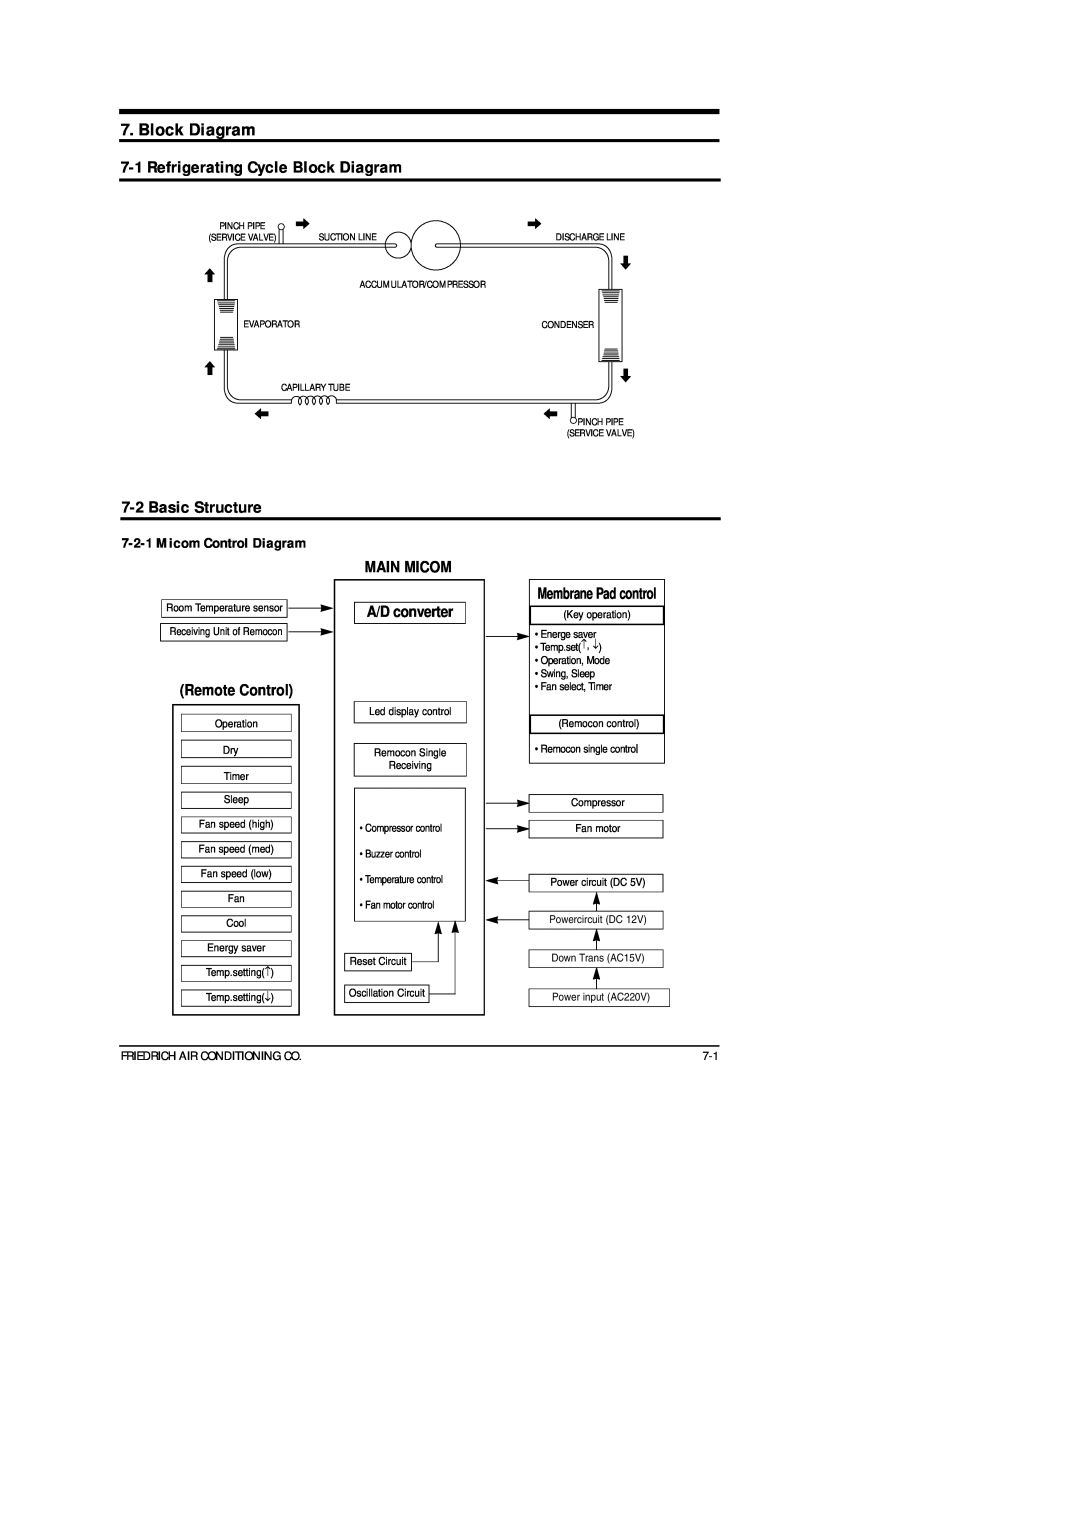 Friedrich SP05A10 7-1Refrigerating Cycle Block Diagram, 7-2Basic Structure, Main Micom, Remote Control, A/D converter 